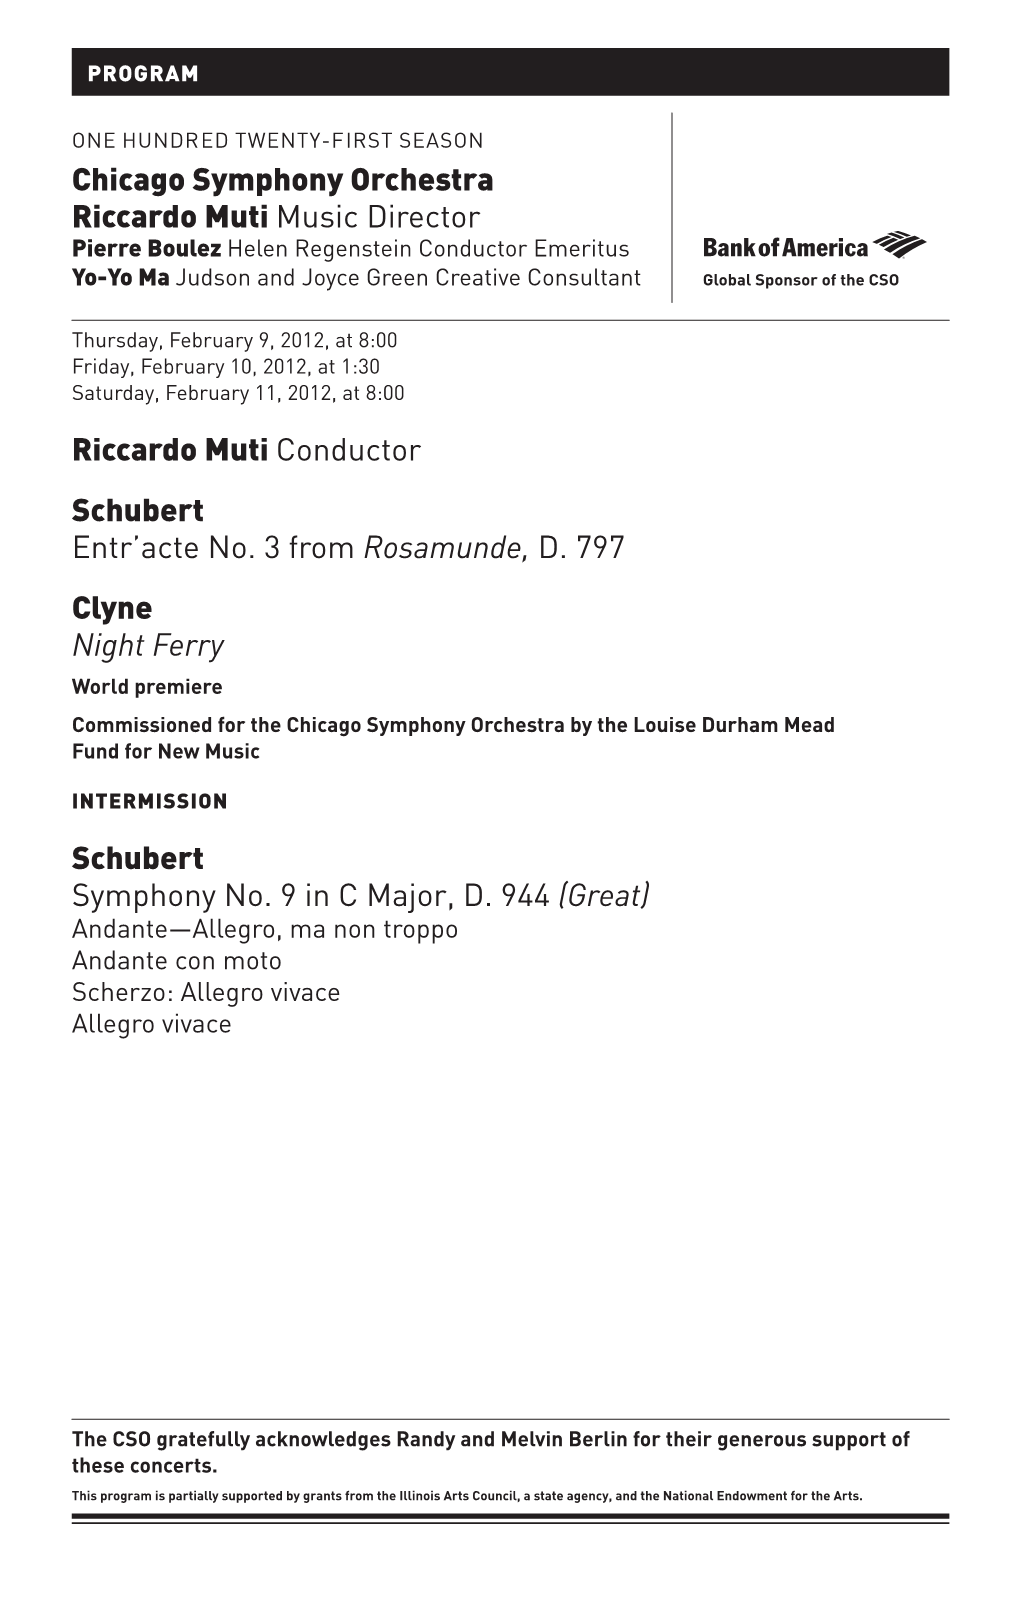 Riccardo Muti Conductor Schubert Entr'acte No. 3 from Rosamunde, D